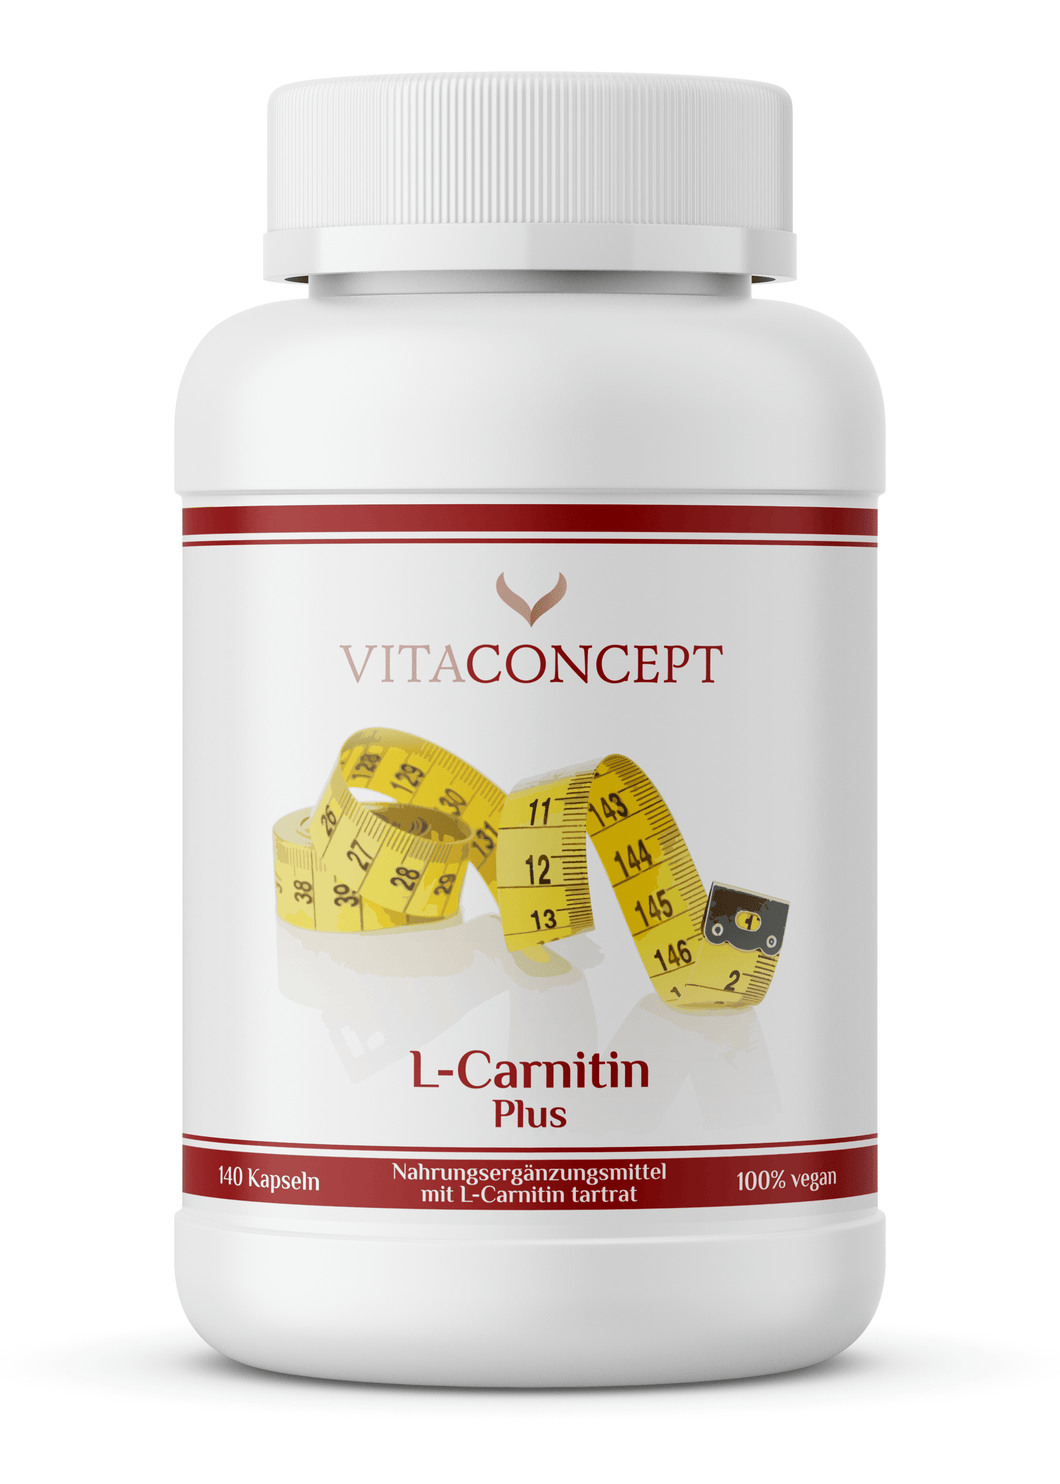 L-Carnitin Plus Kapseln mit 740 mg pro Kapsel unterstützt die Fettverbrennung.